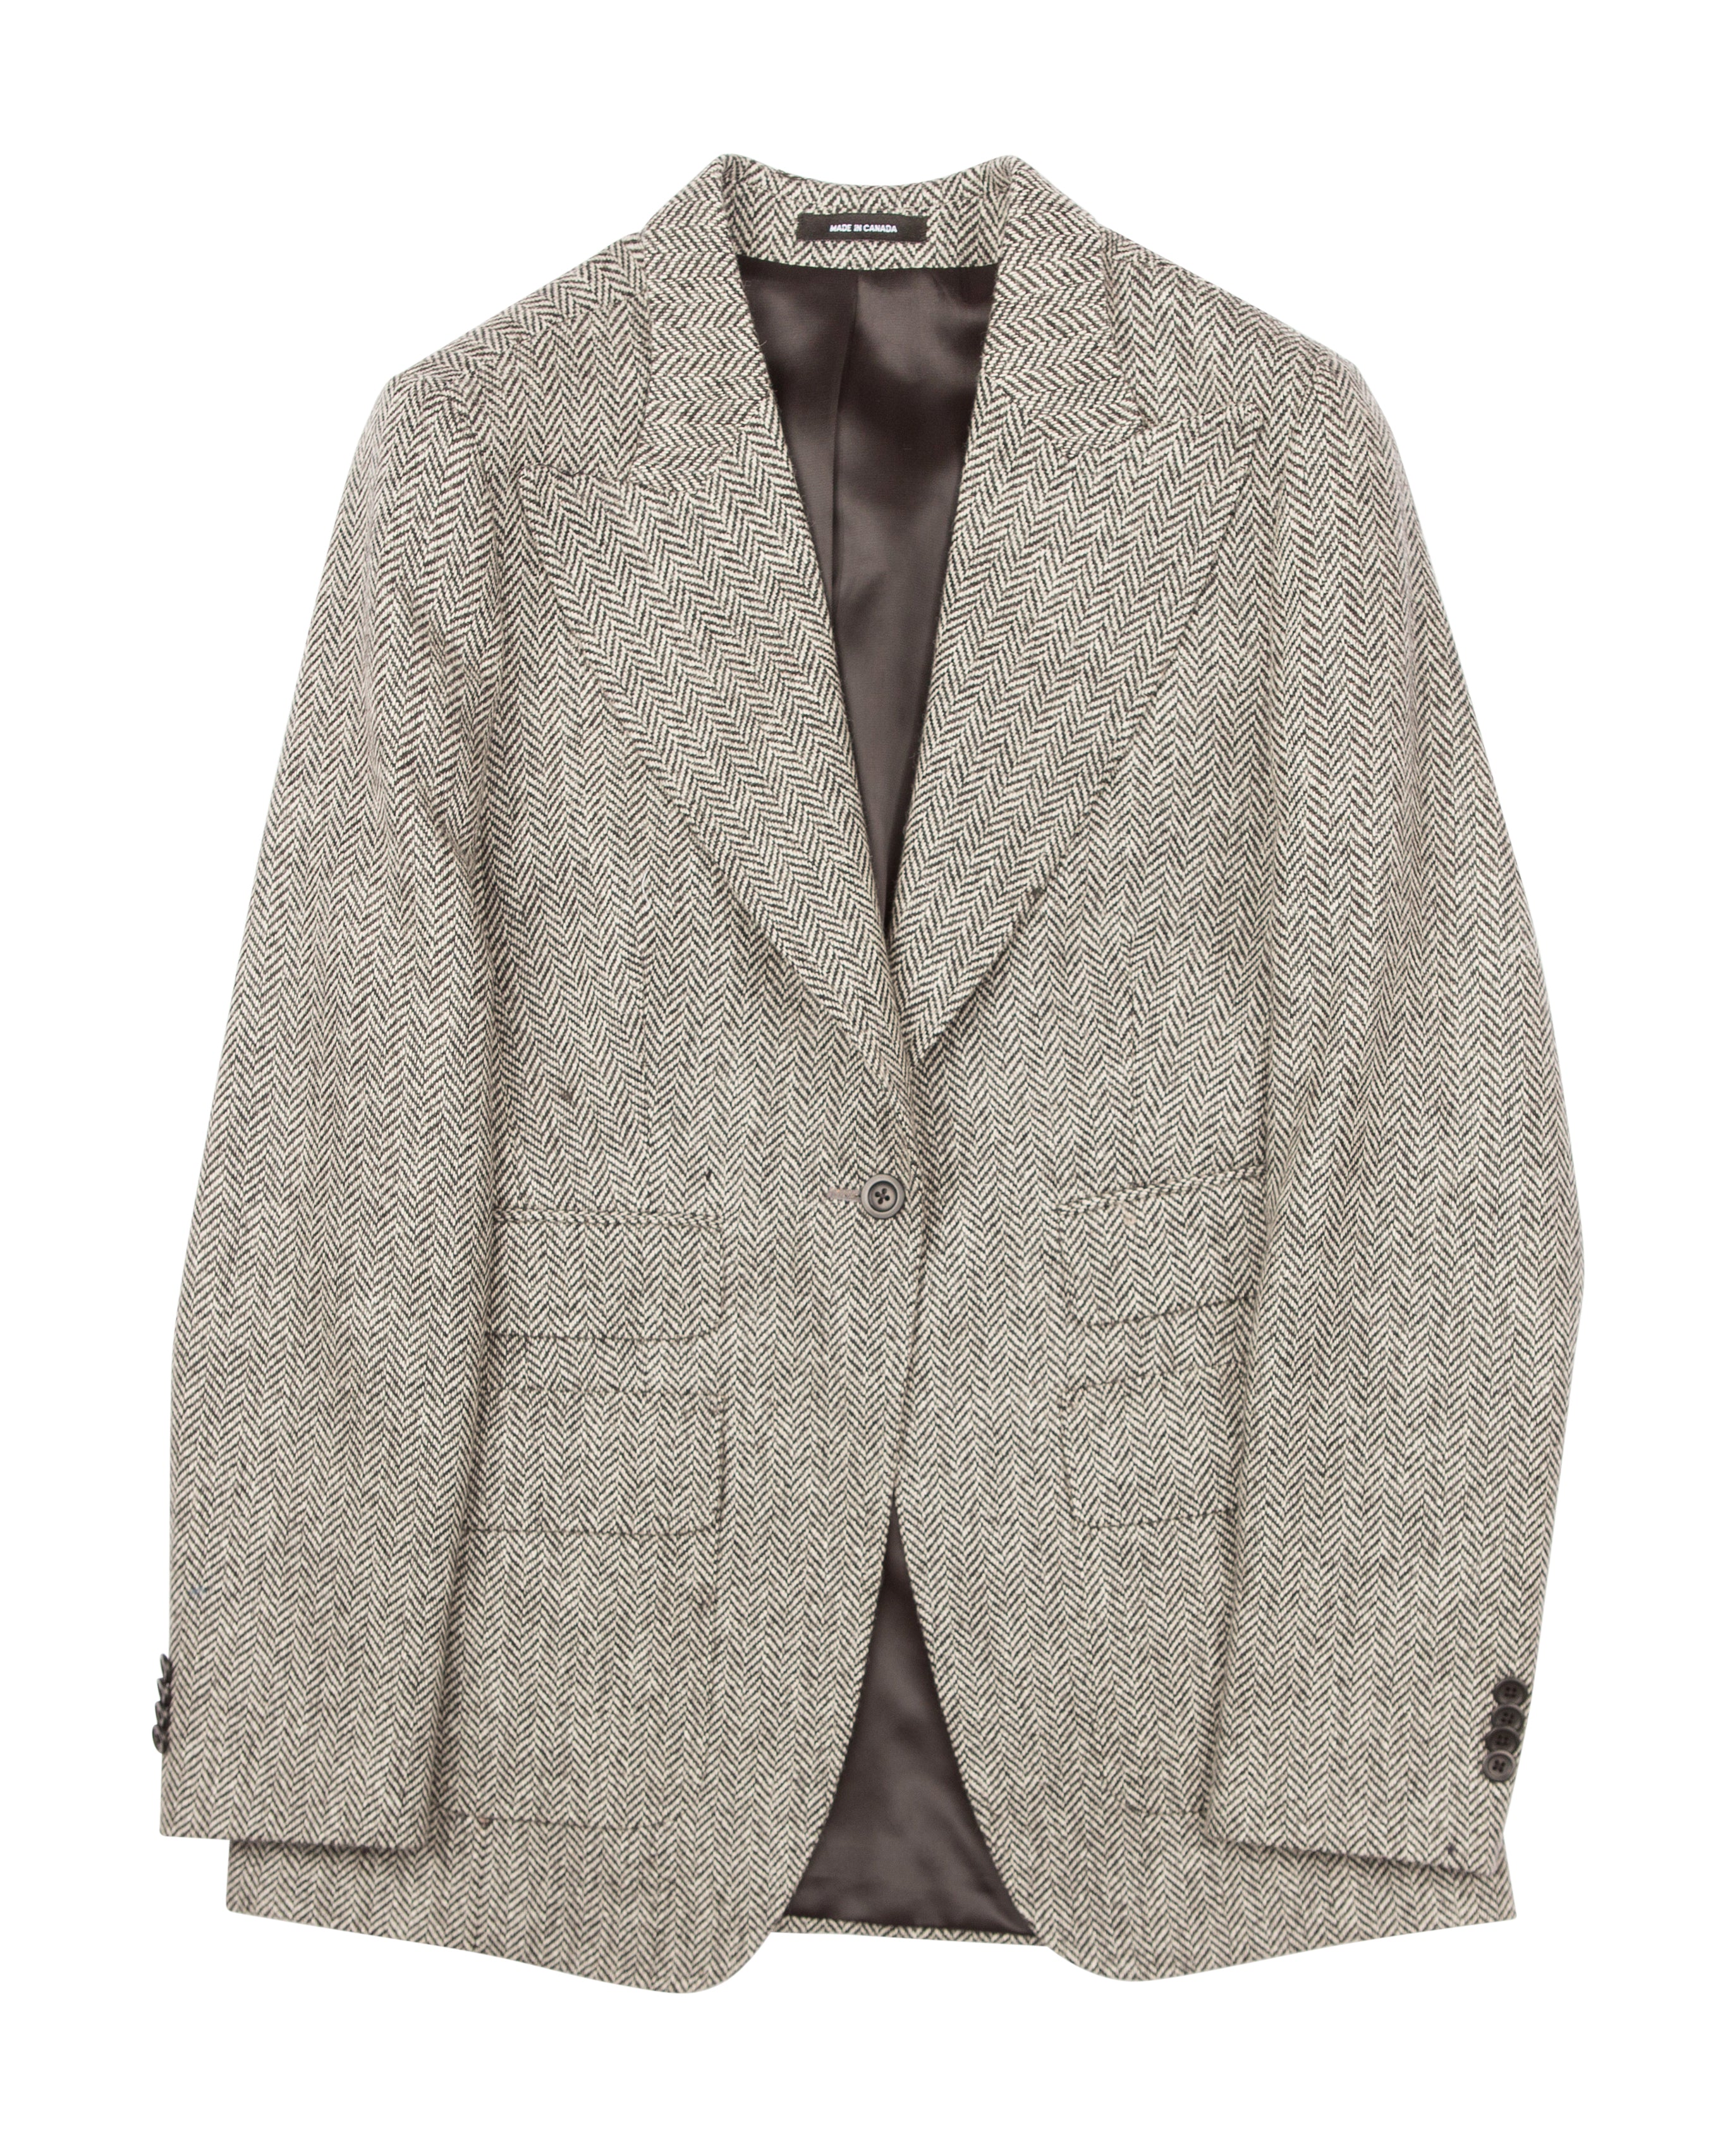 Stone Tweed Jacket | Third Son Tailor Shop